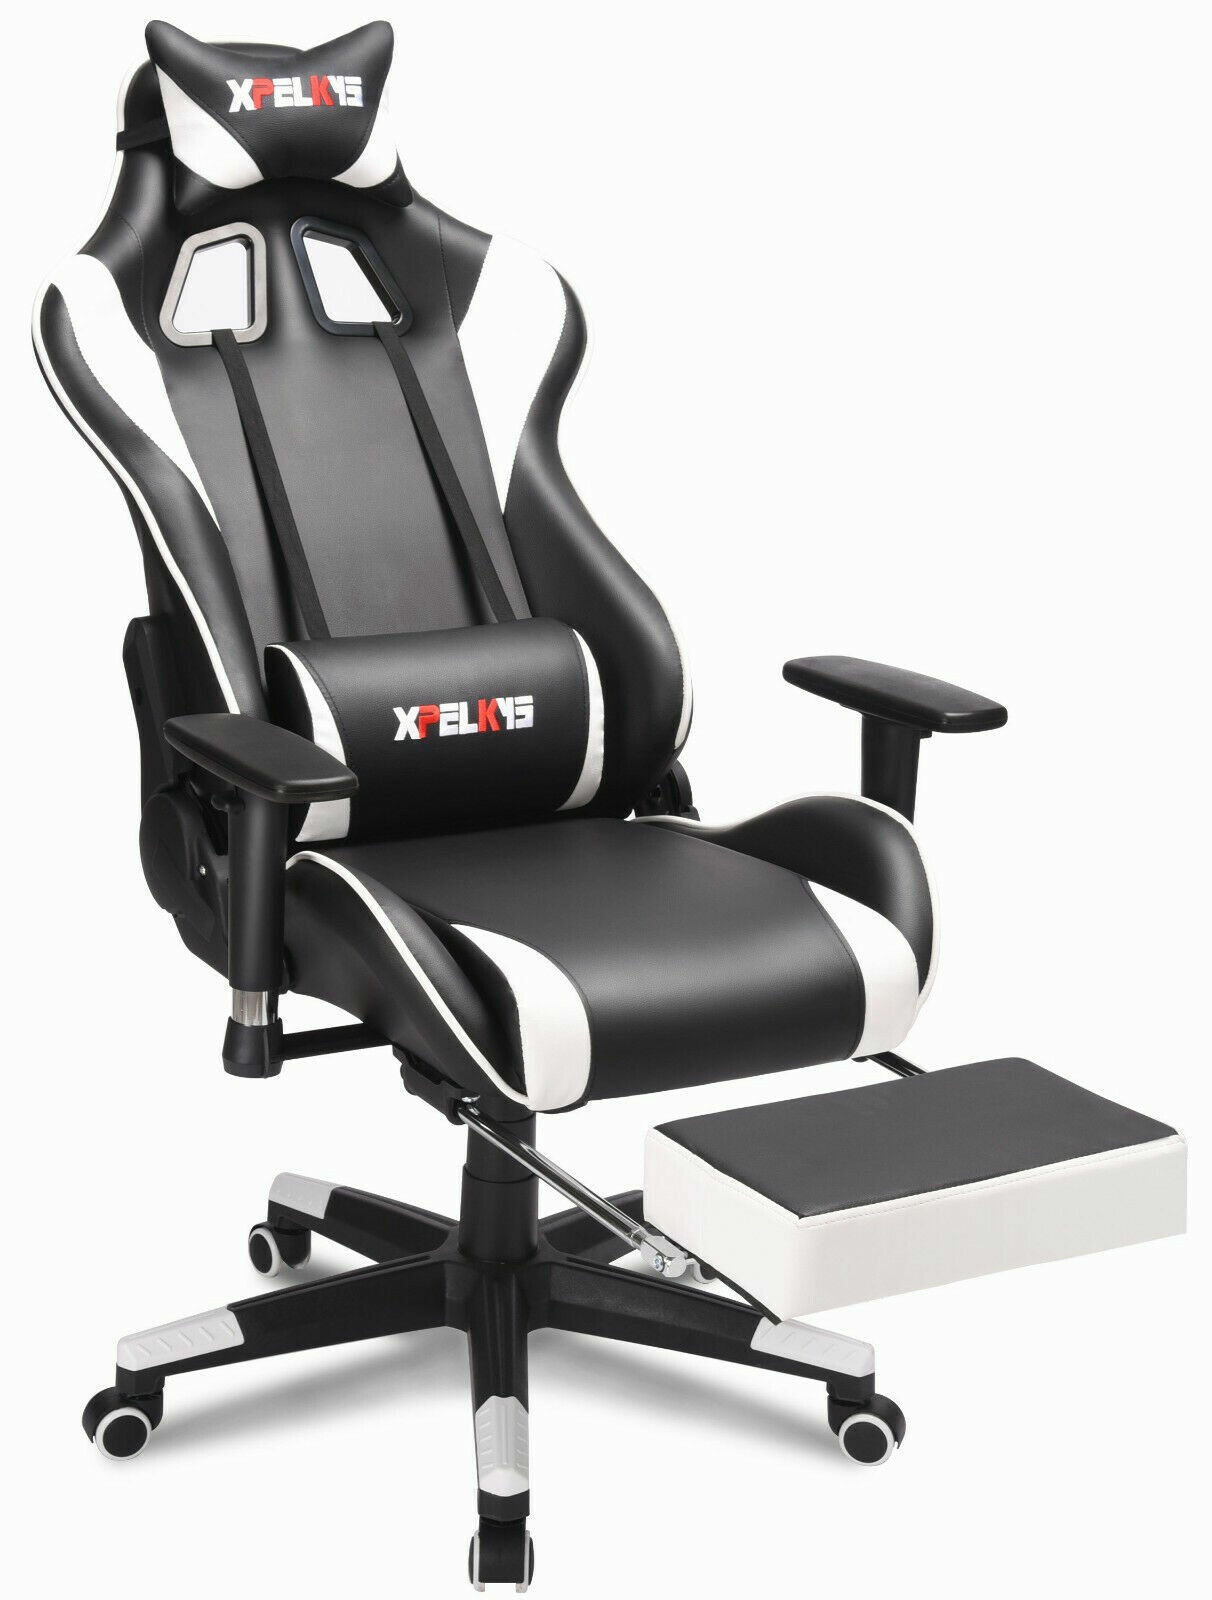 XPELKYS Ergonomic Computer Gaming Chair